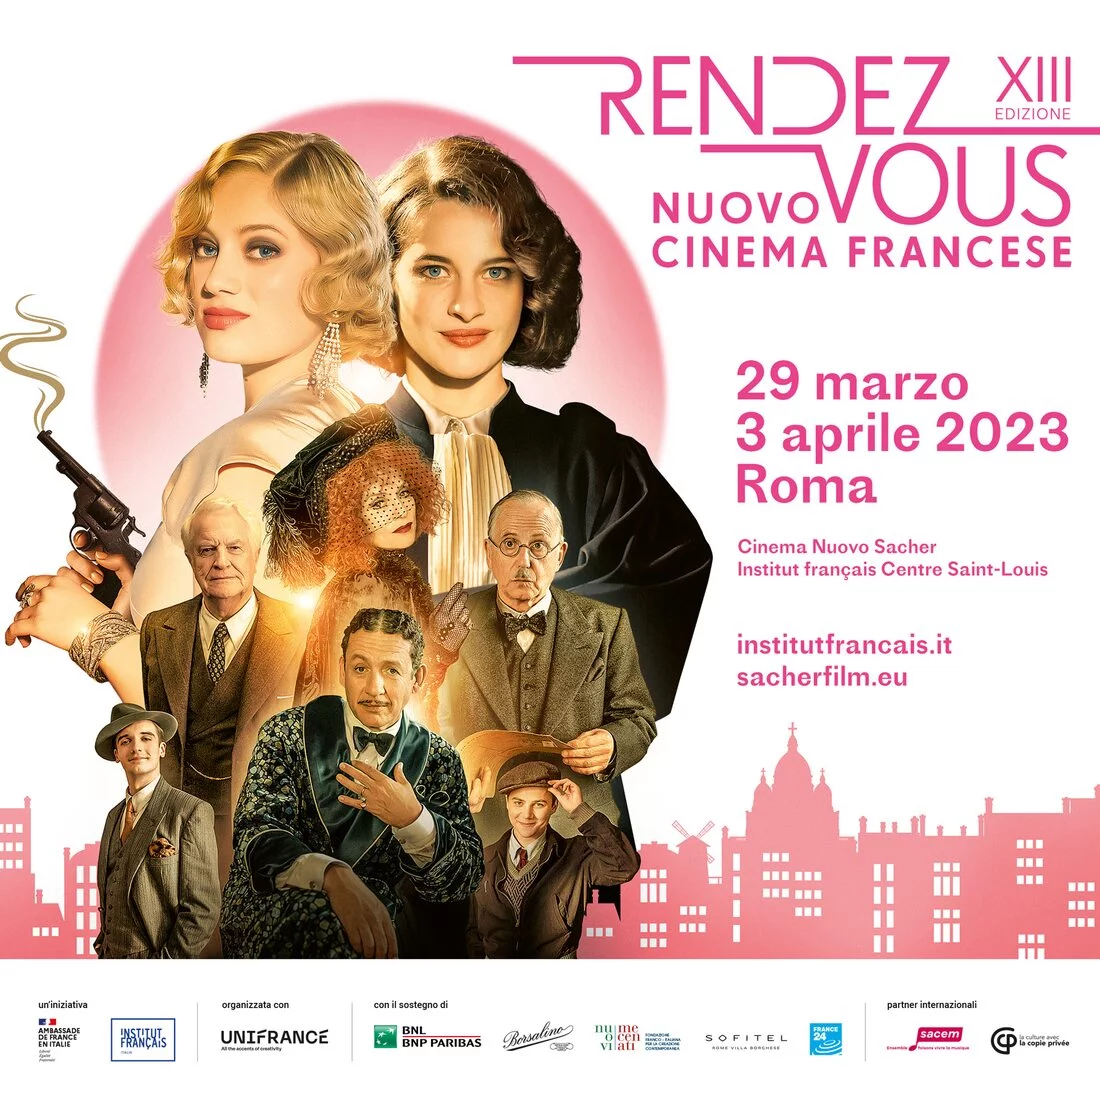 Rendez-Vous, Festival Cinema Francese - XIII edizione